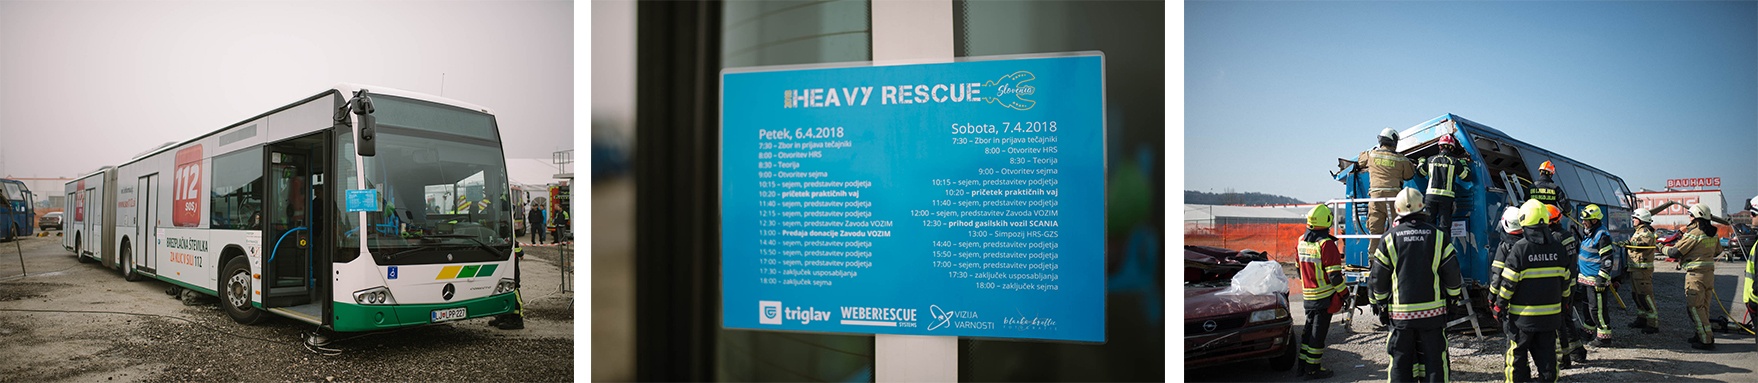 Heavy Rescue Slovenia - avtobus (1)